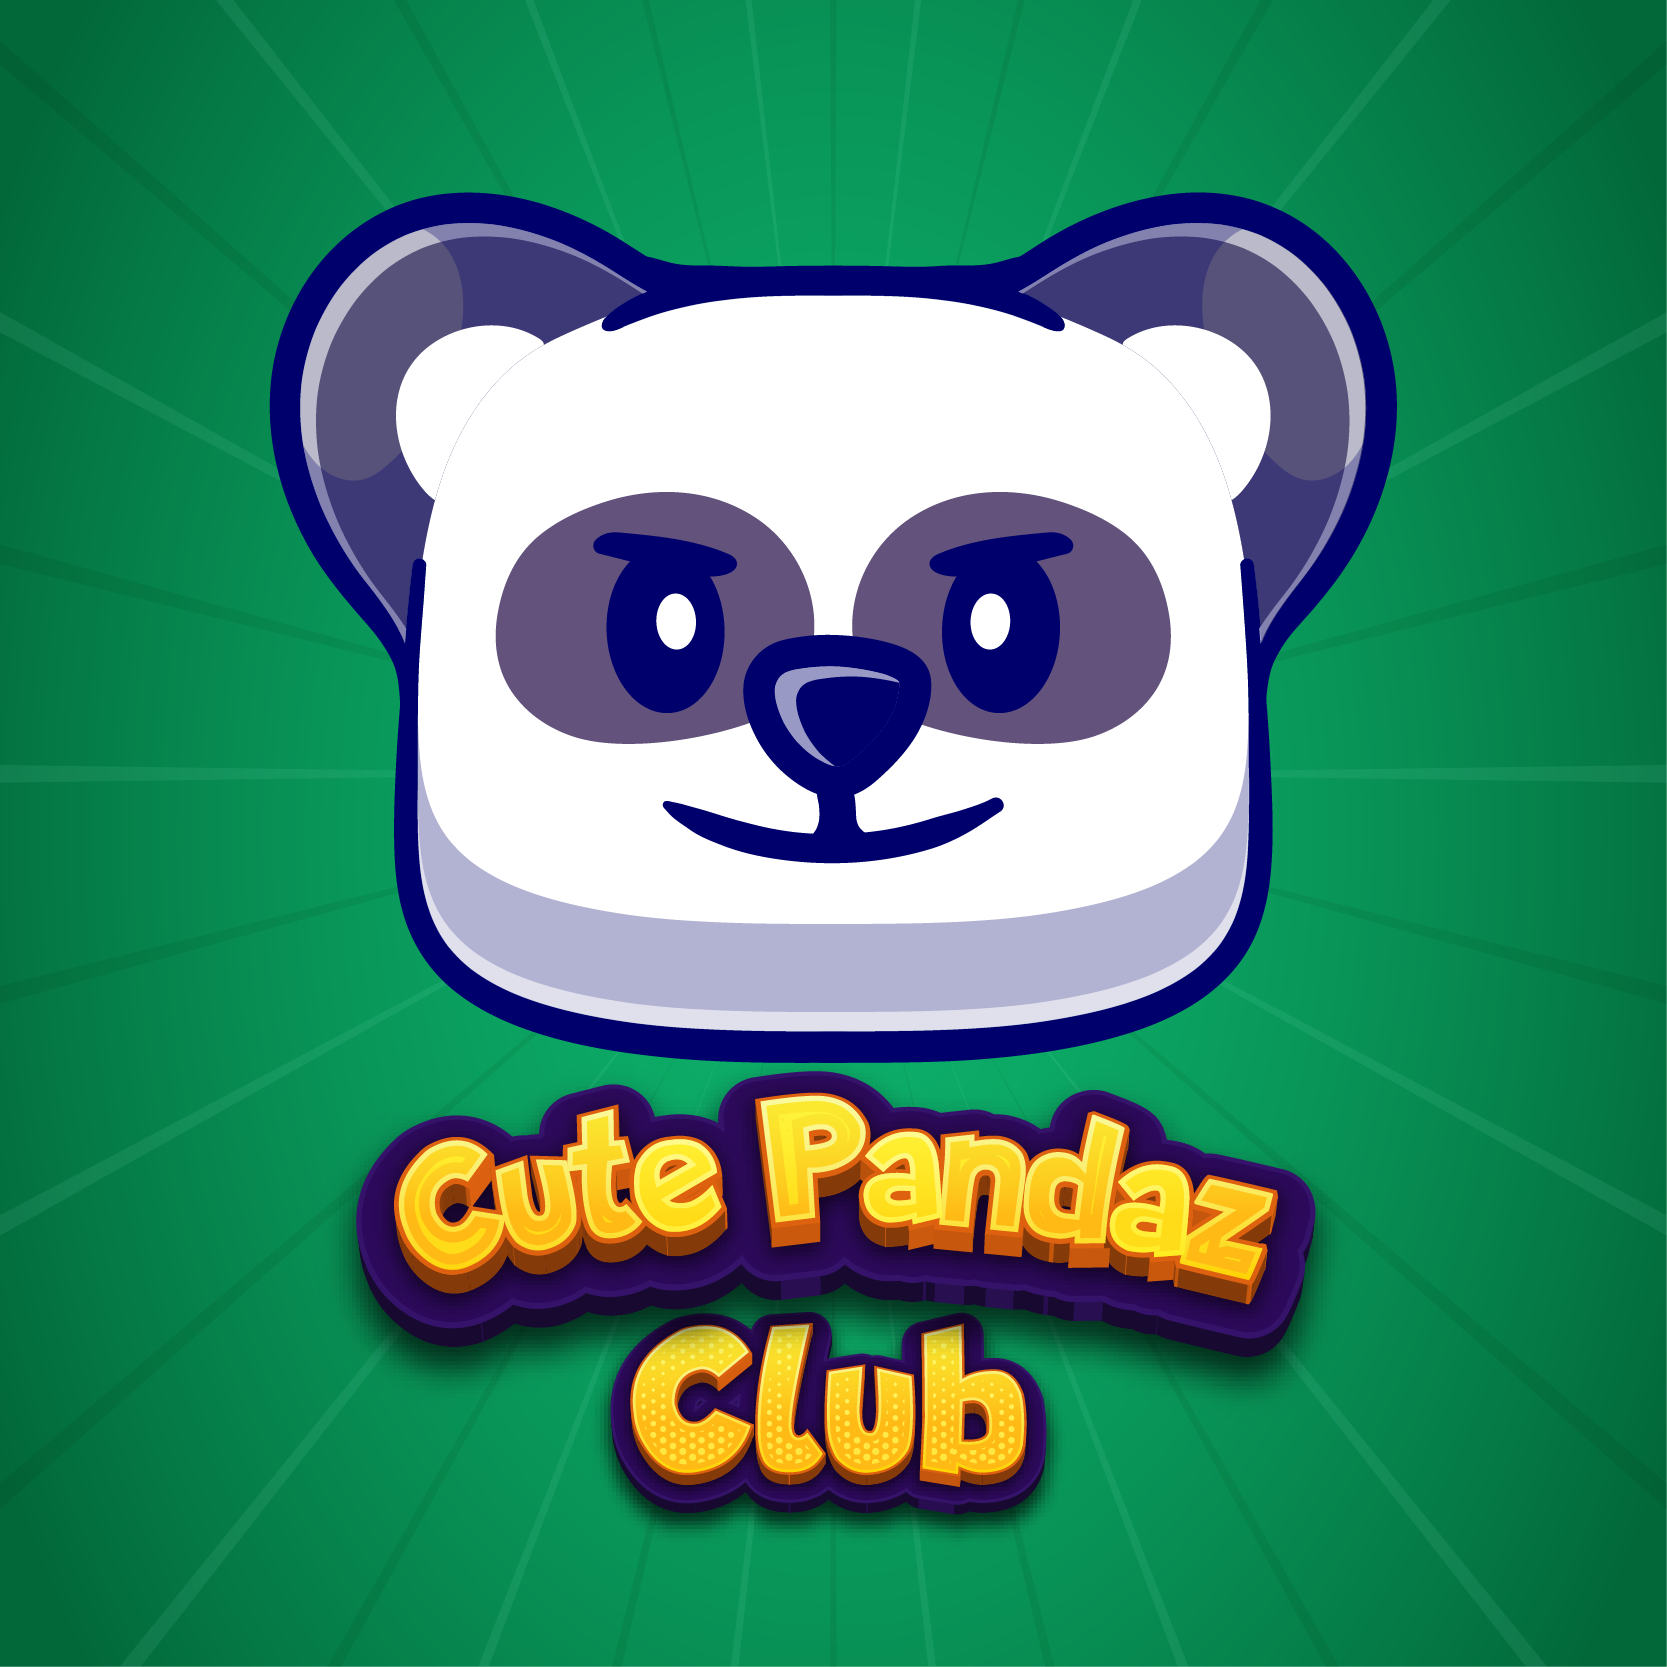 Cute Pandaz Club